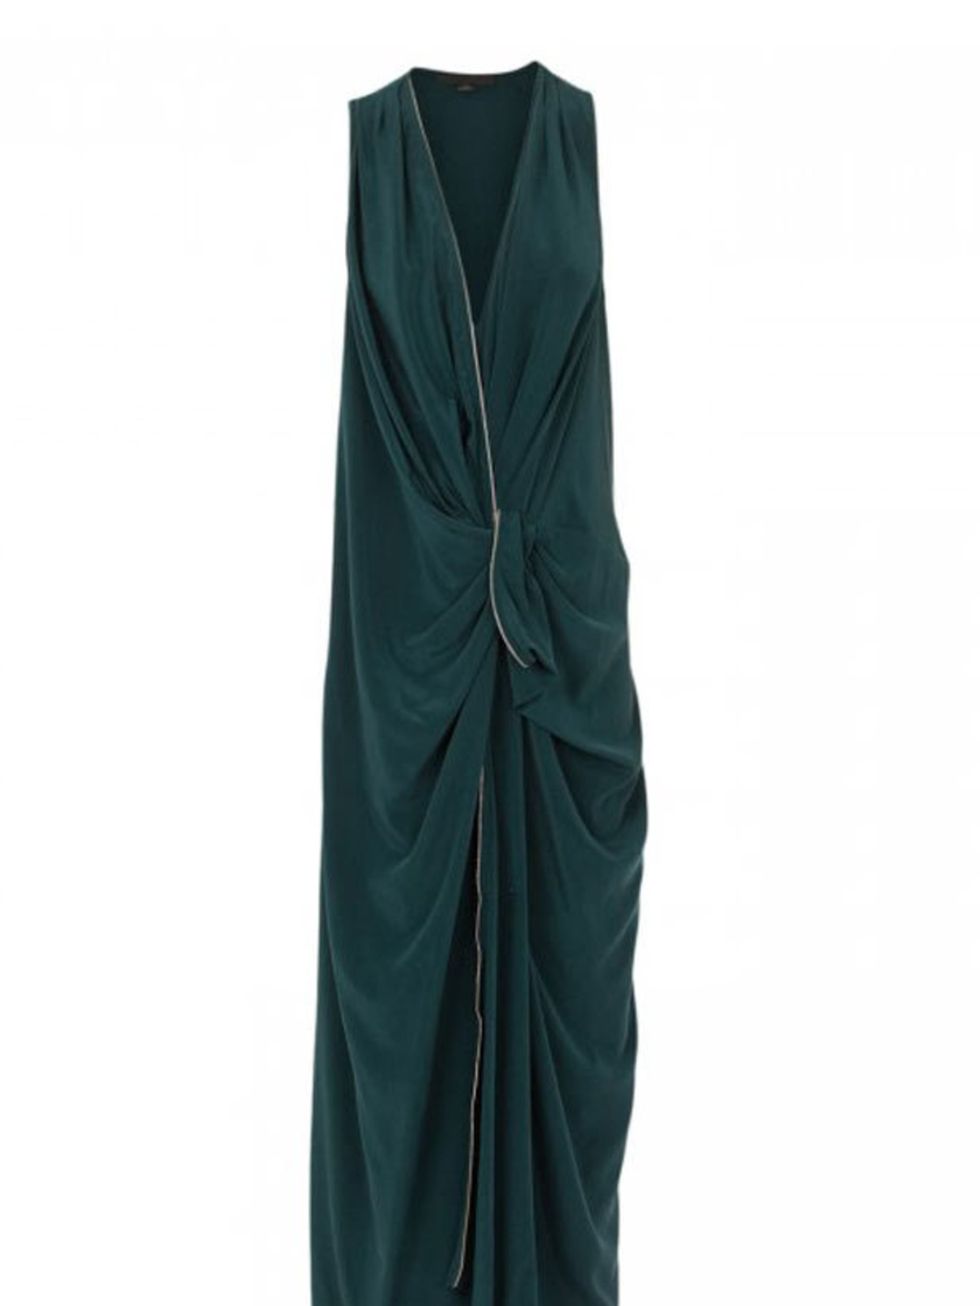 <p>Alexander Wang zip through maxi dress, £585, at <a href="http://www.harveynichols.com/womens/categories-1/designer-dresses/cocktail/s371752-zip-through-silk-maxi-dress.html?colour=TEAL">Harvey Nichols</a></p>